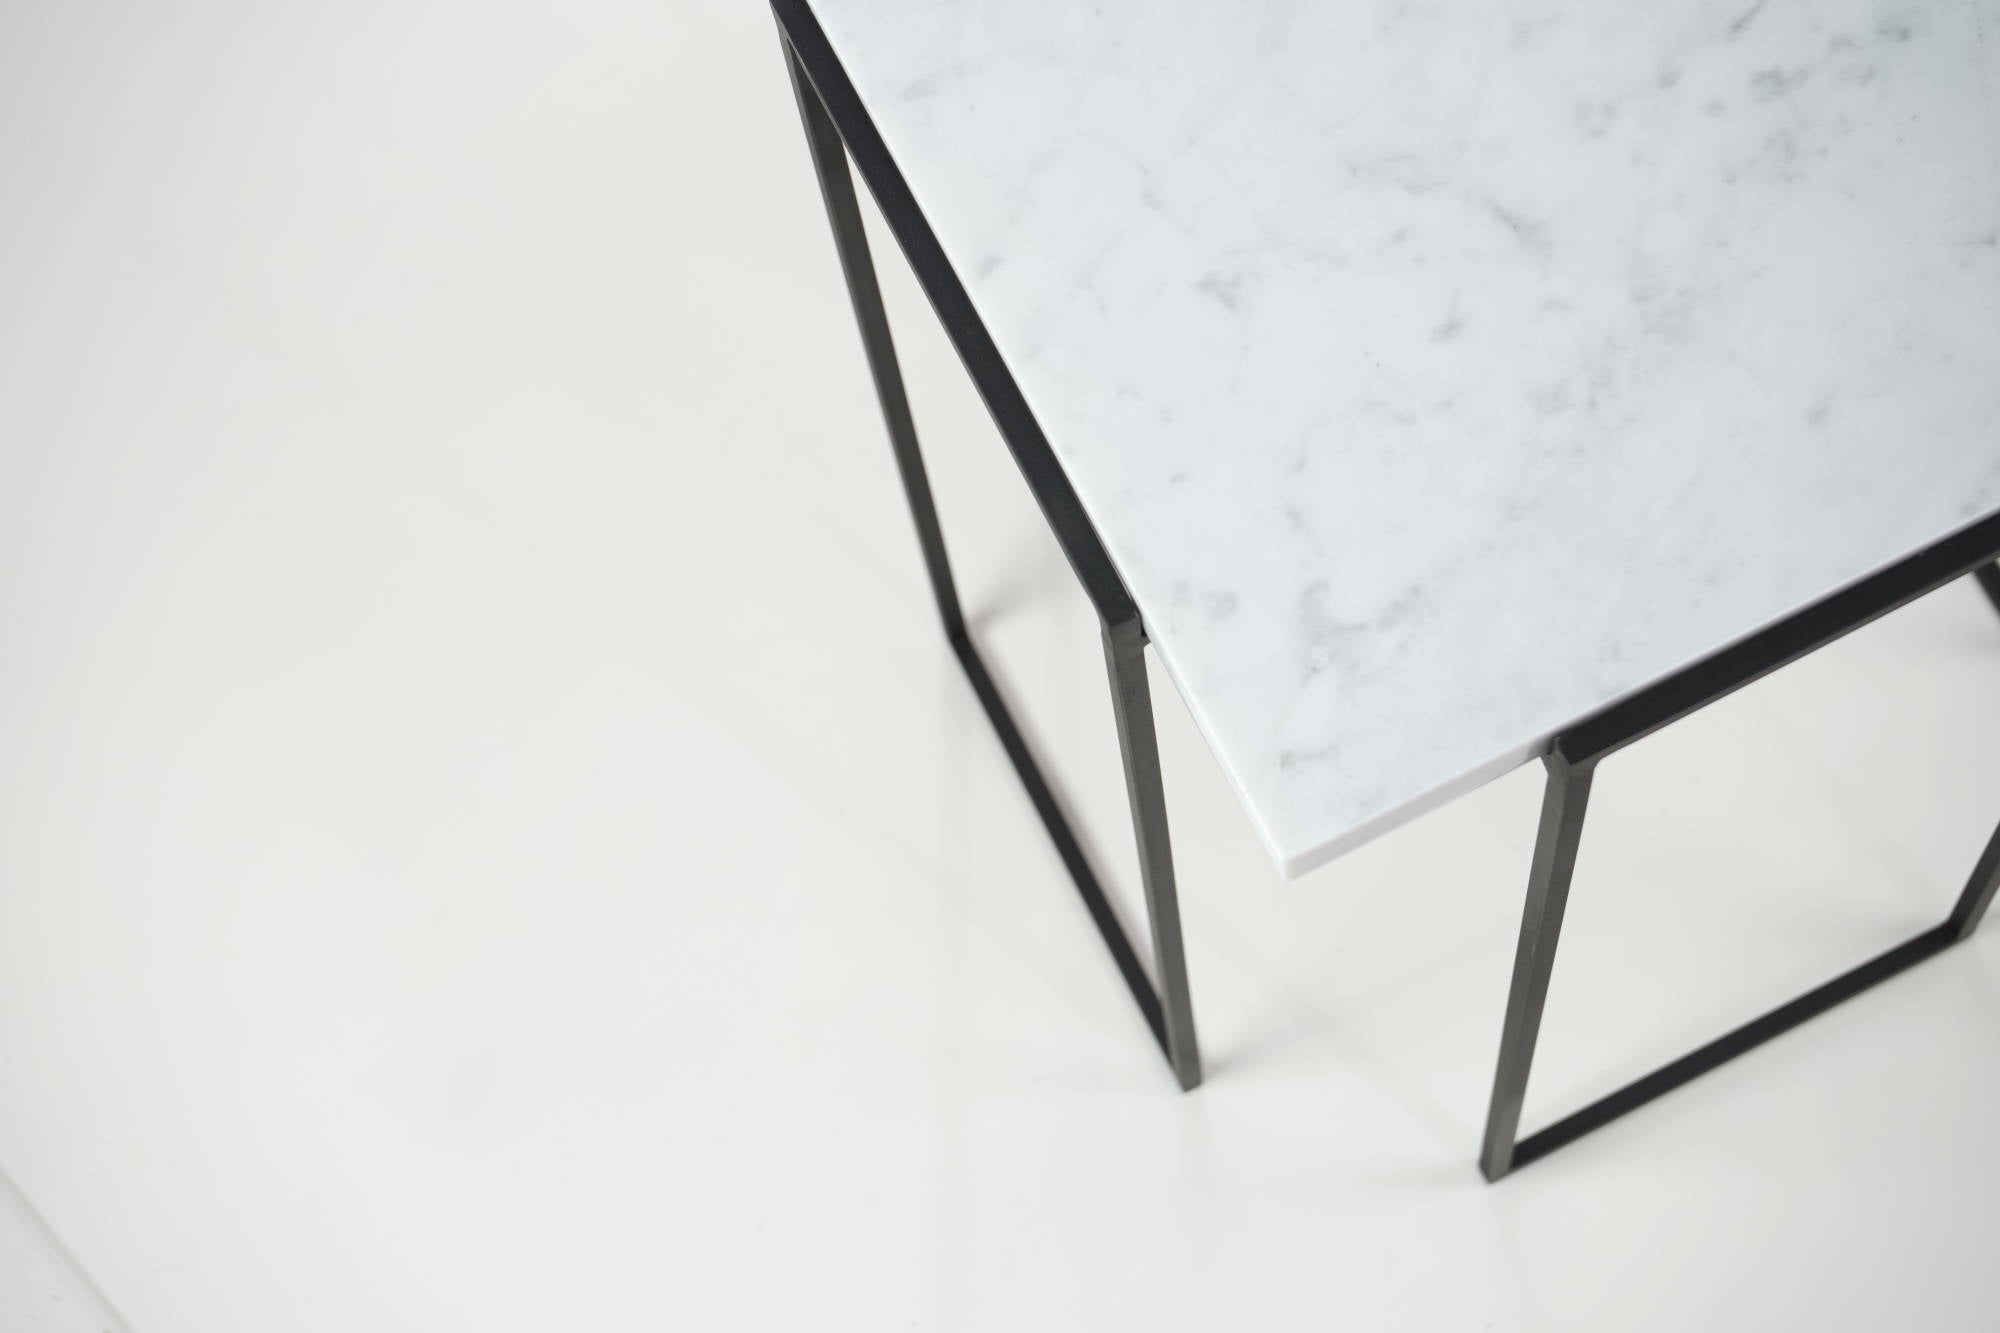 Kaus - Carrara marble side table